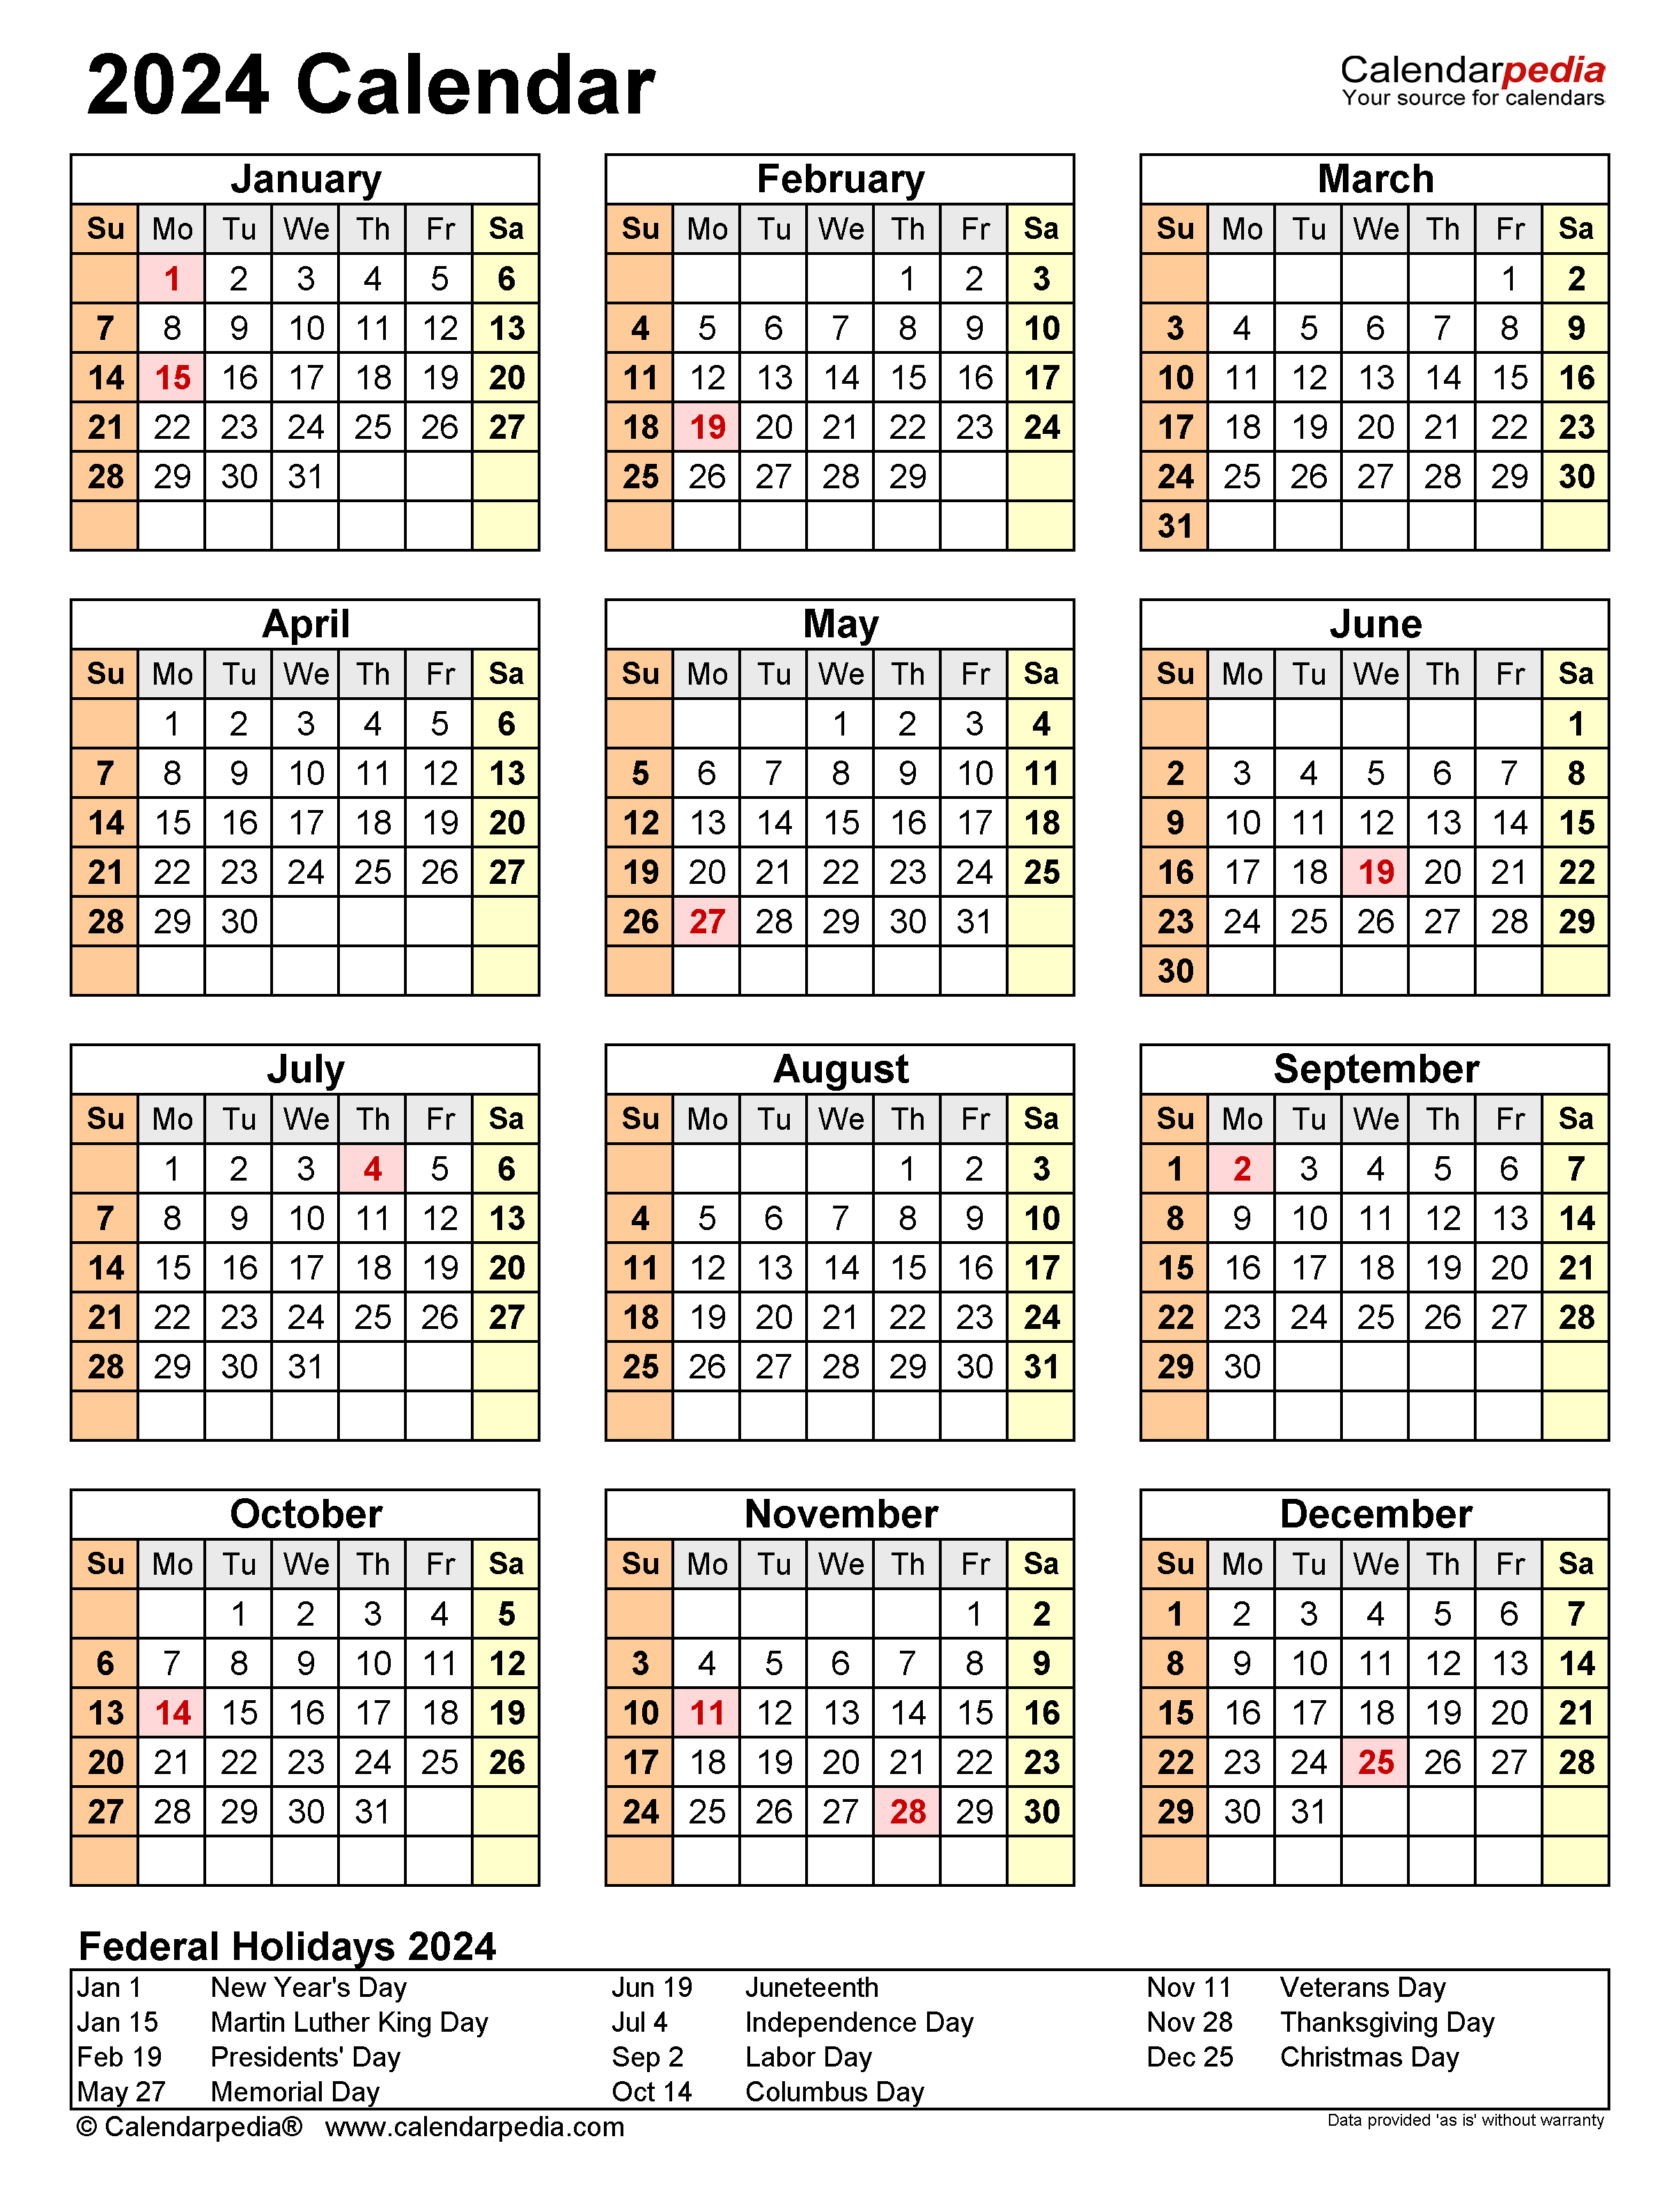 Free Printable 2024 Calendar With Holidays Crownflourmills | Free Printable 2024 Calendar With Holidays Download